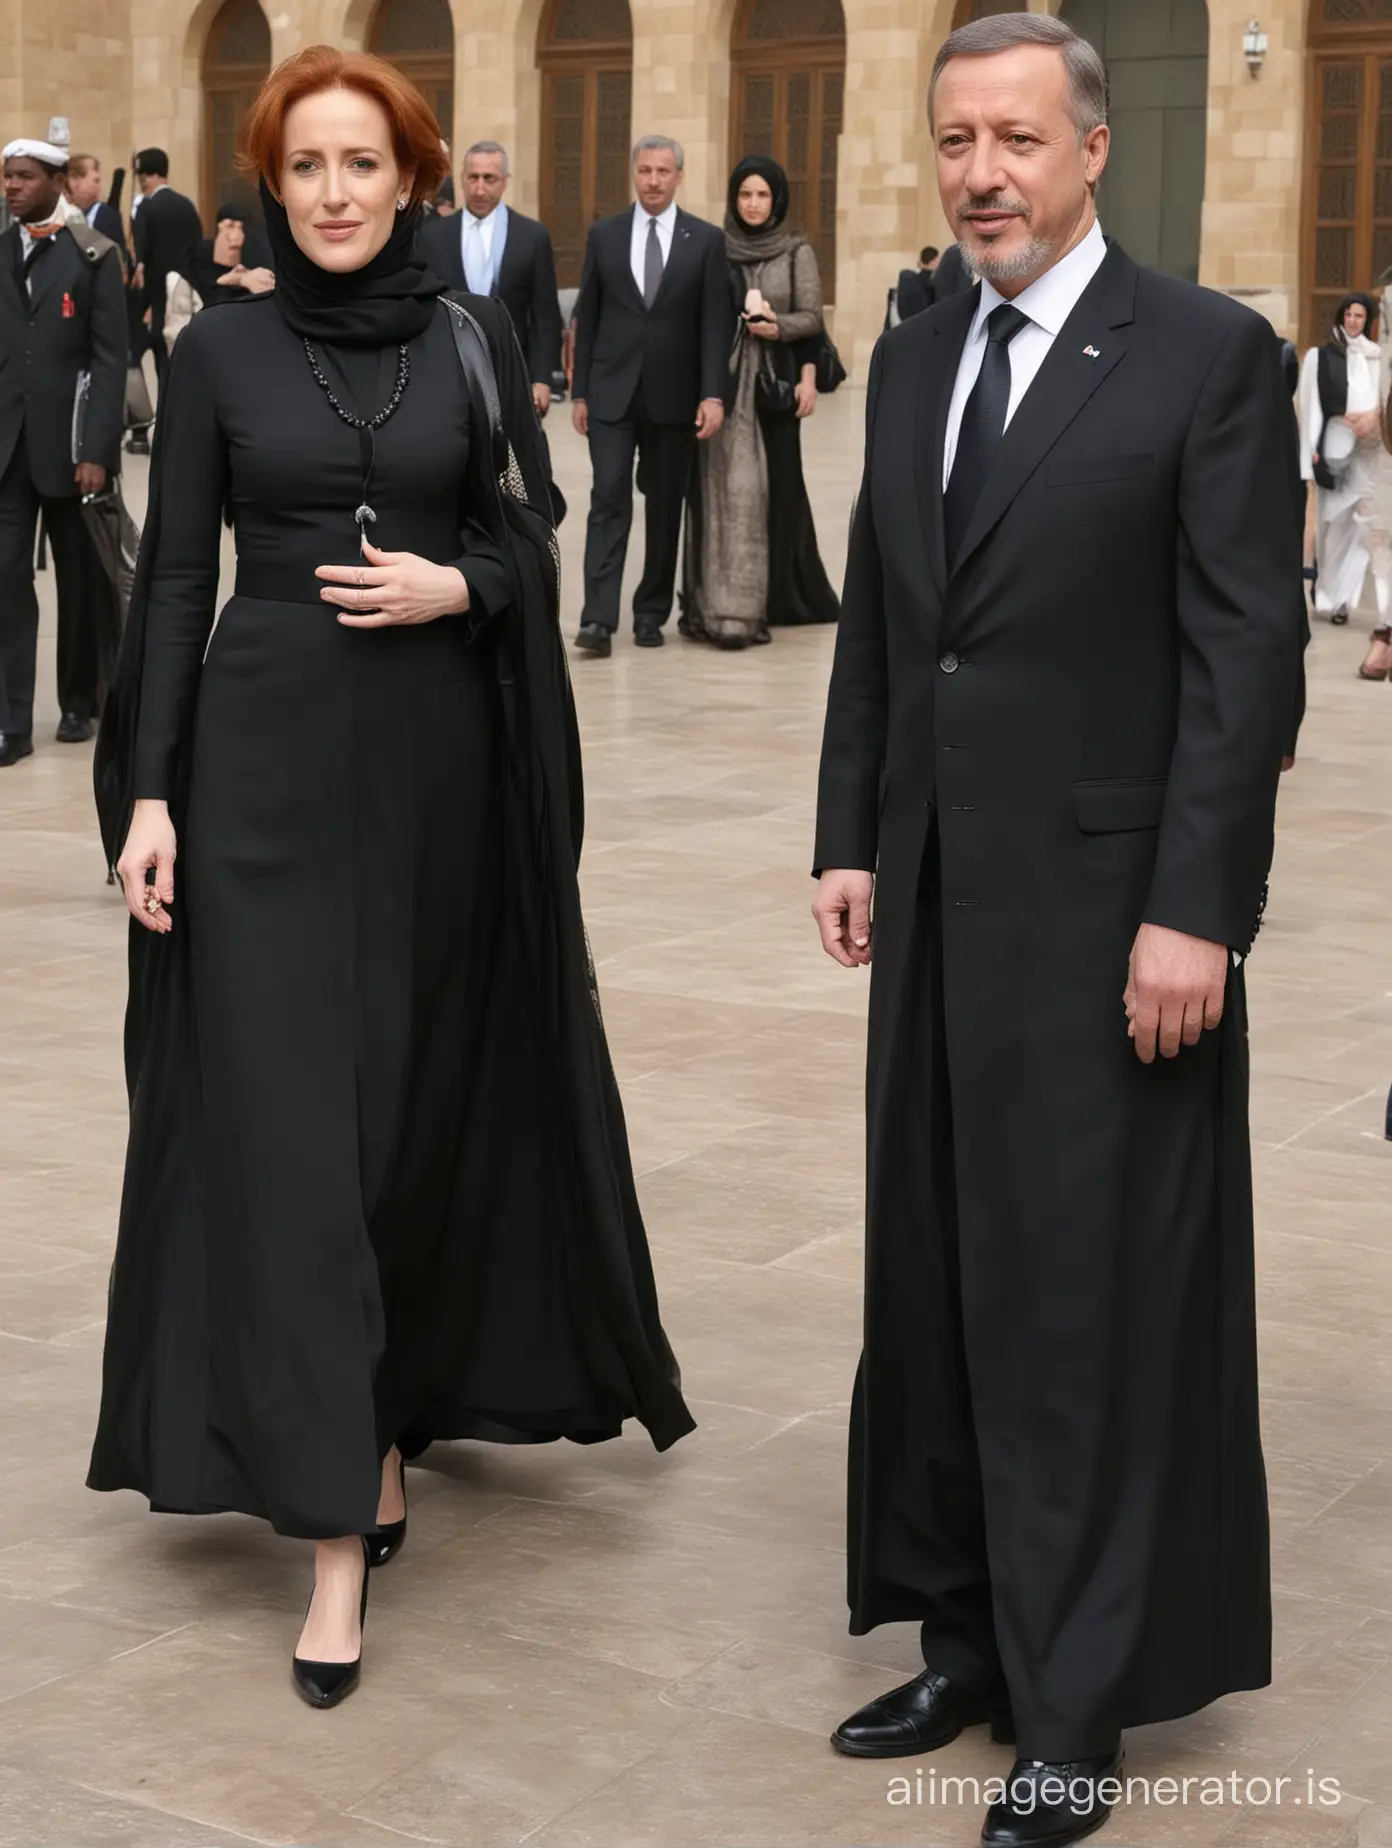 Gillian-Anderson-Stands-Beside-President-Erdogan-in-Black-Jilbab-and-Hijab